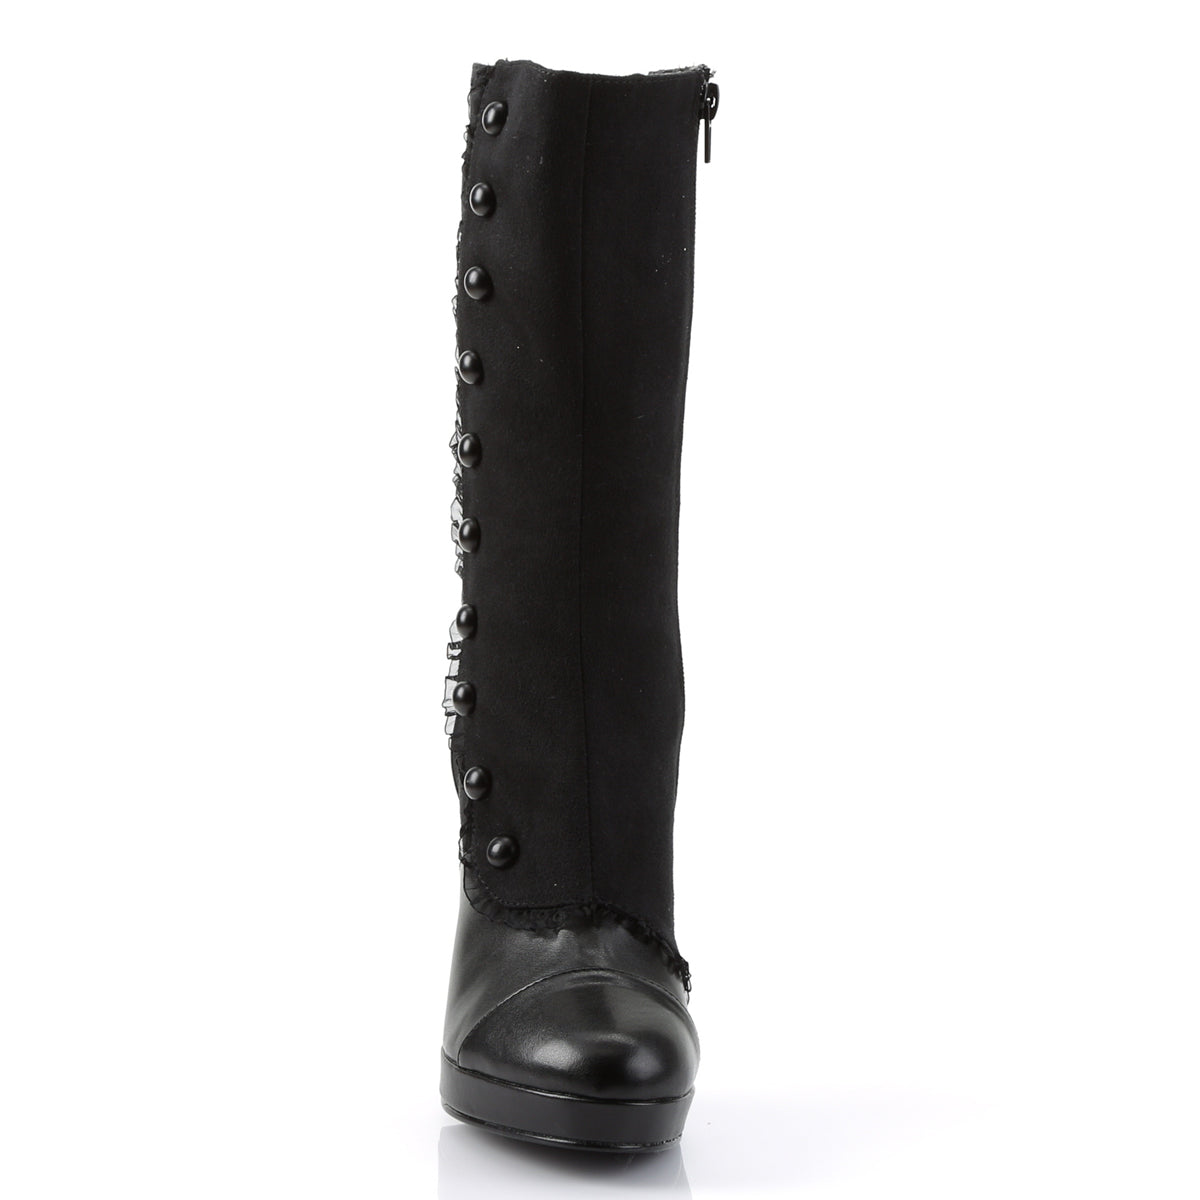 SPLENDOR-130 Retro 4.5" Heel Black Microfiber Women Boots Funtasma Costume Shoes Alternative Footwear